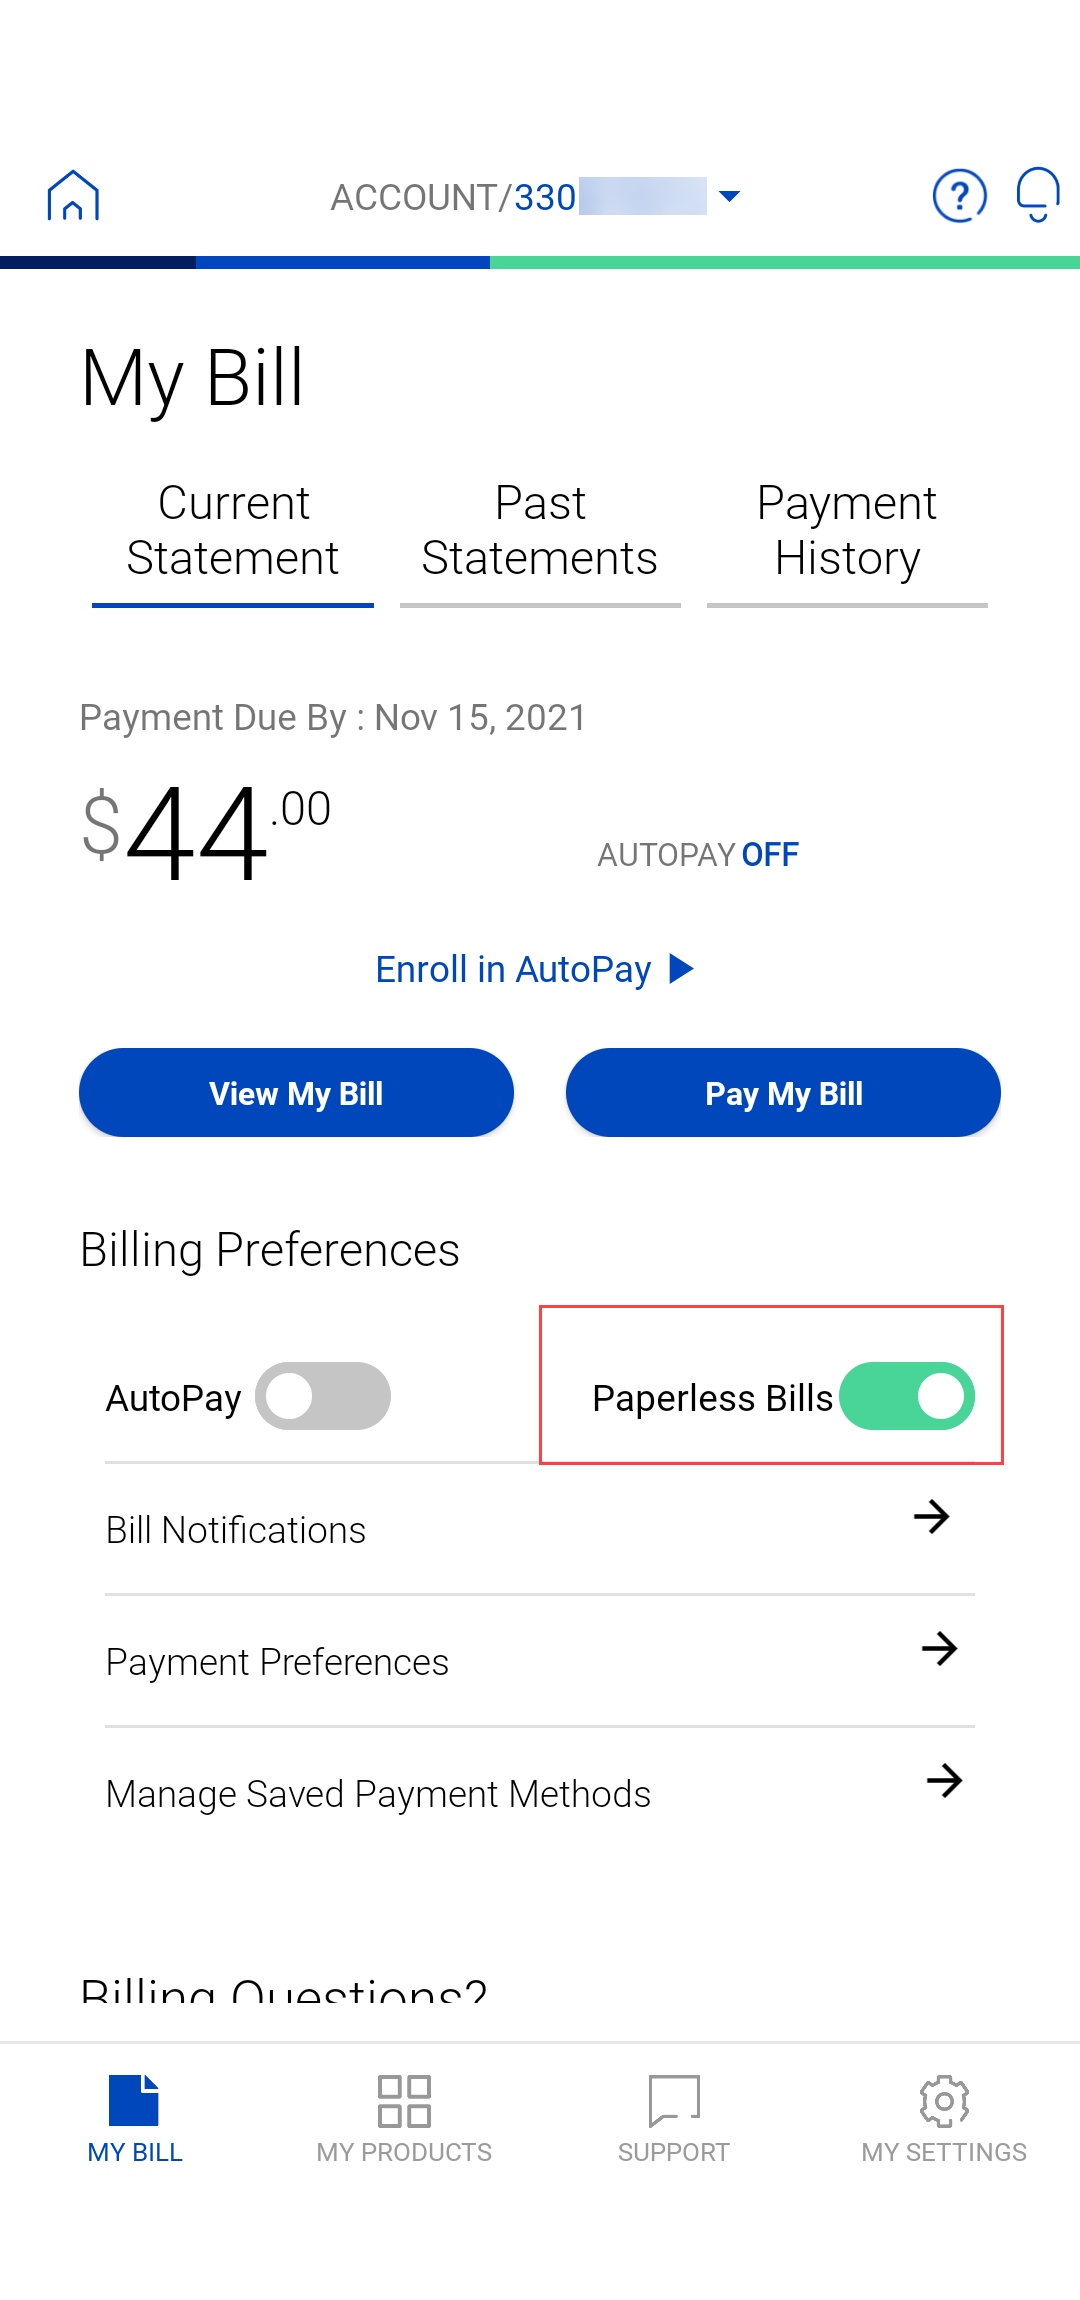 My CenturyLink app - My Bill